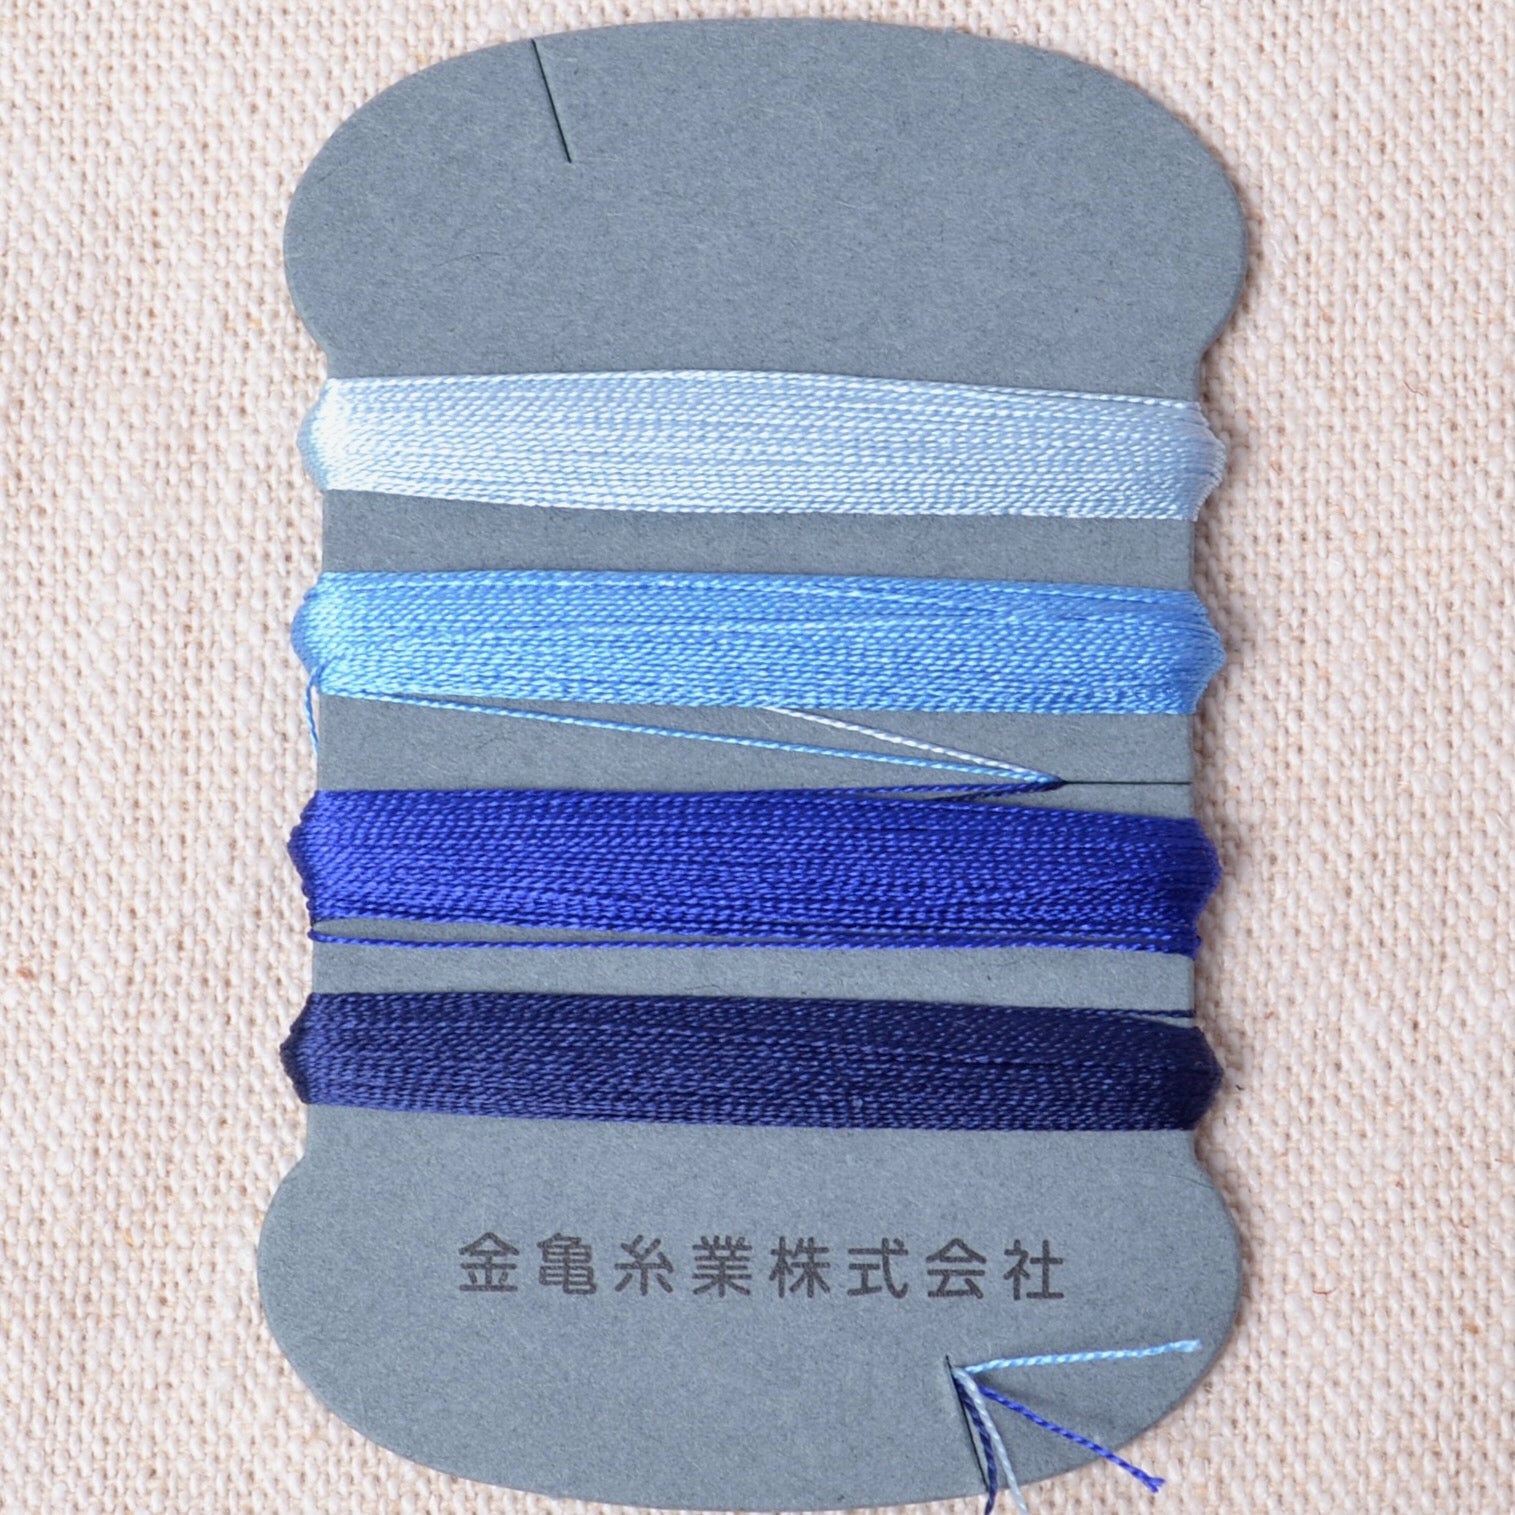 100% Silk embroidery floss, ocean blues